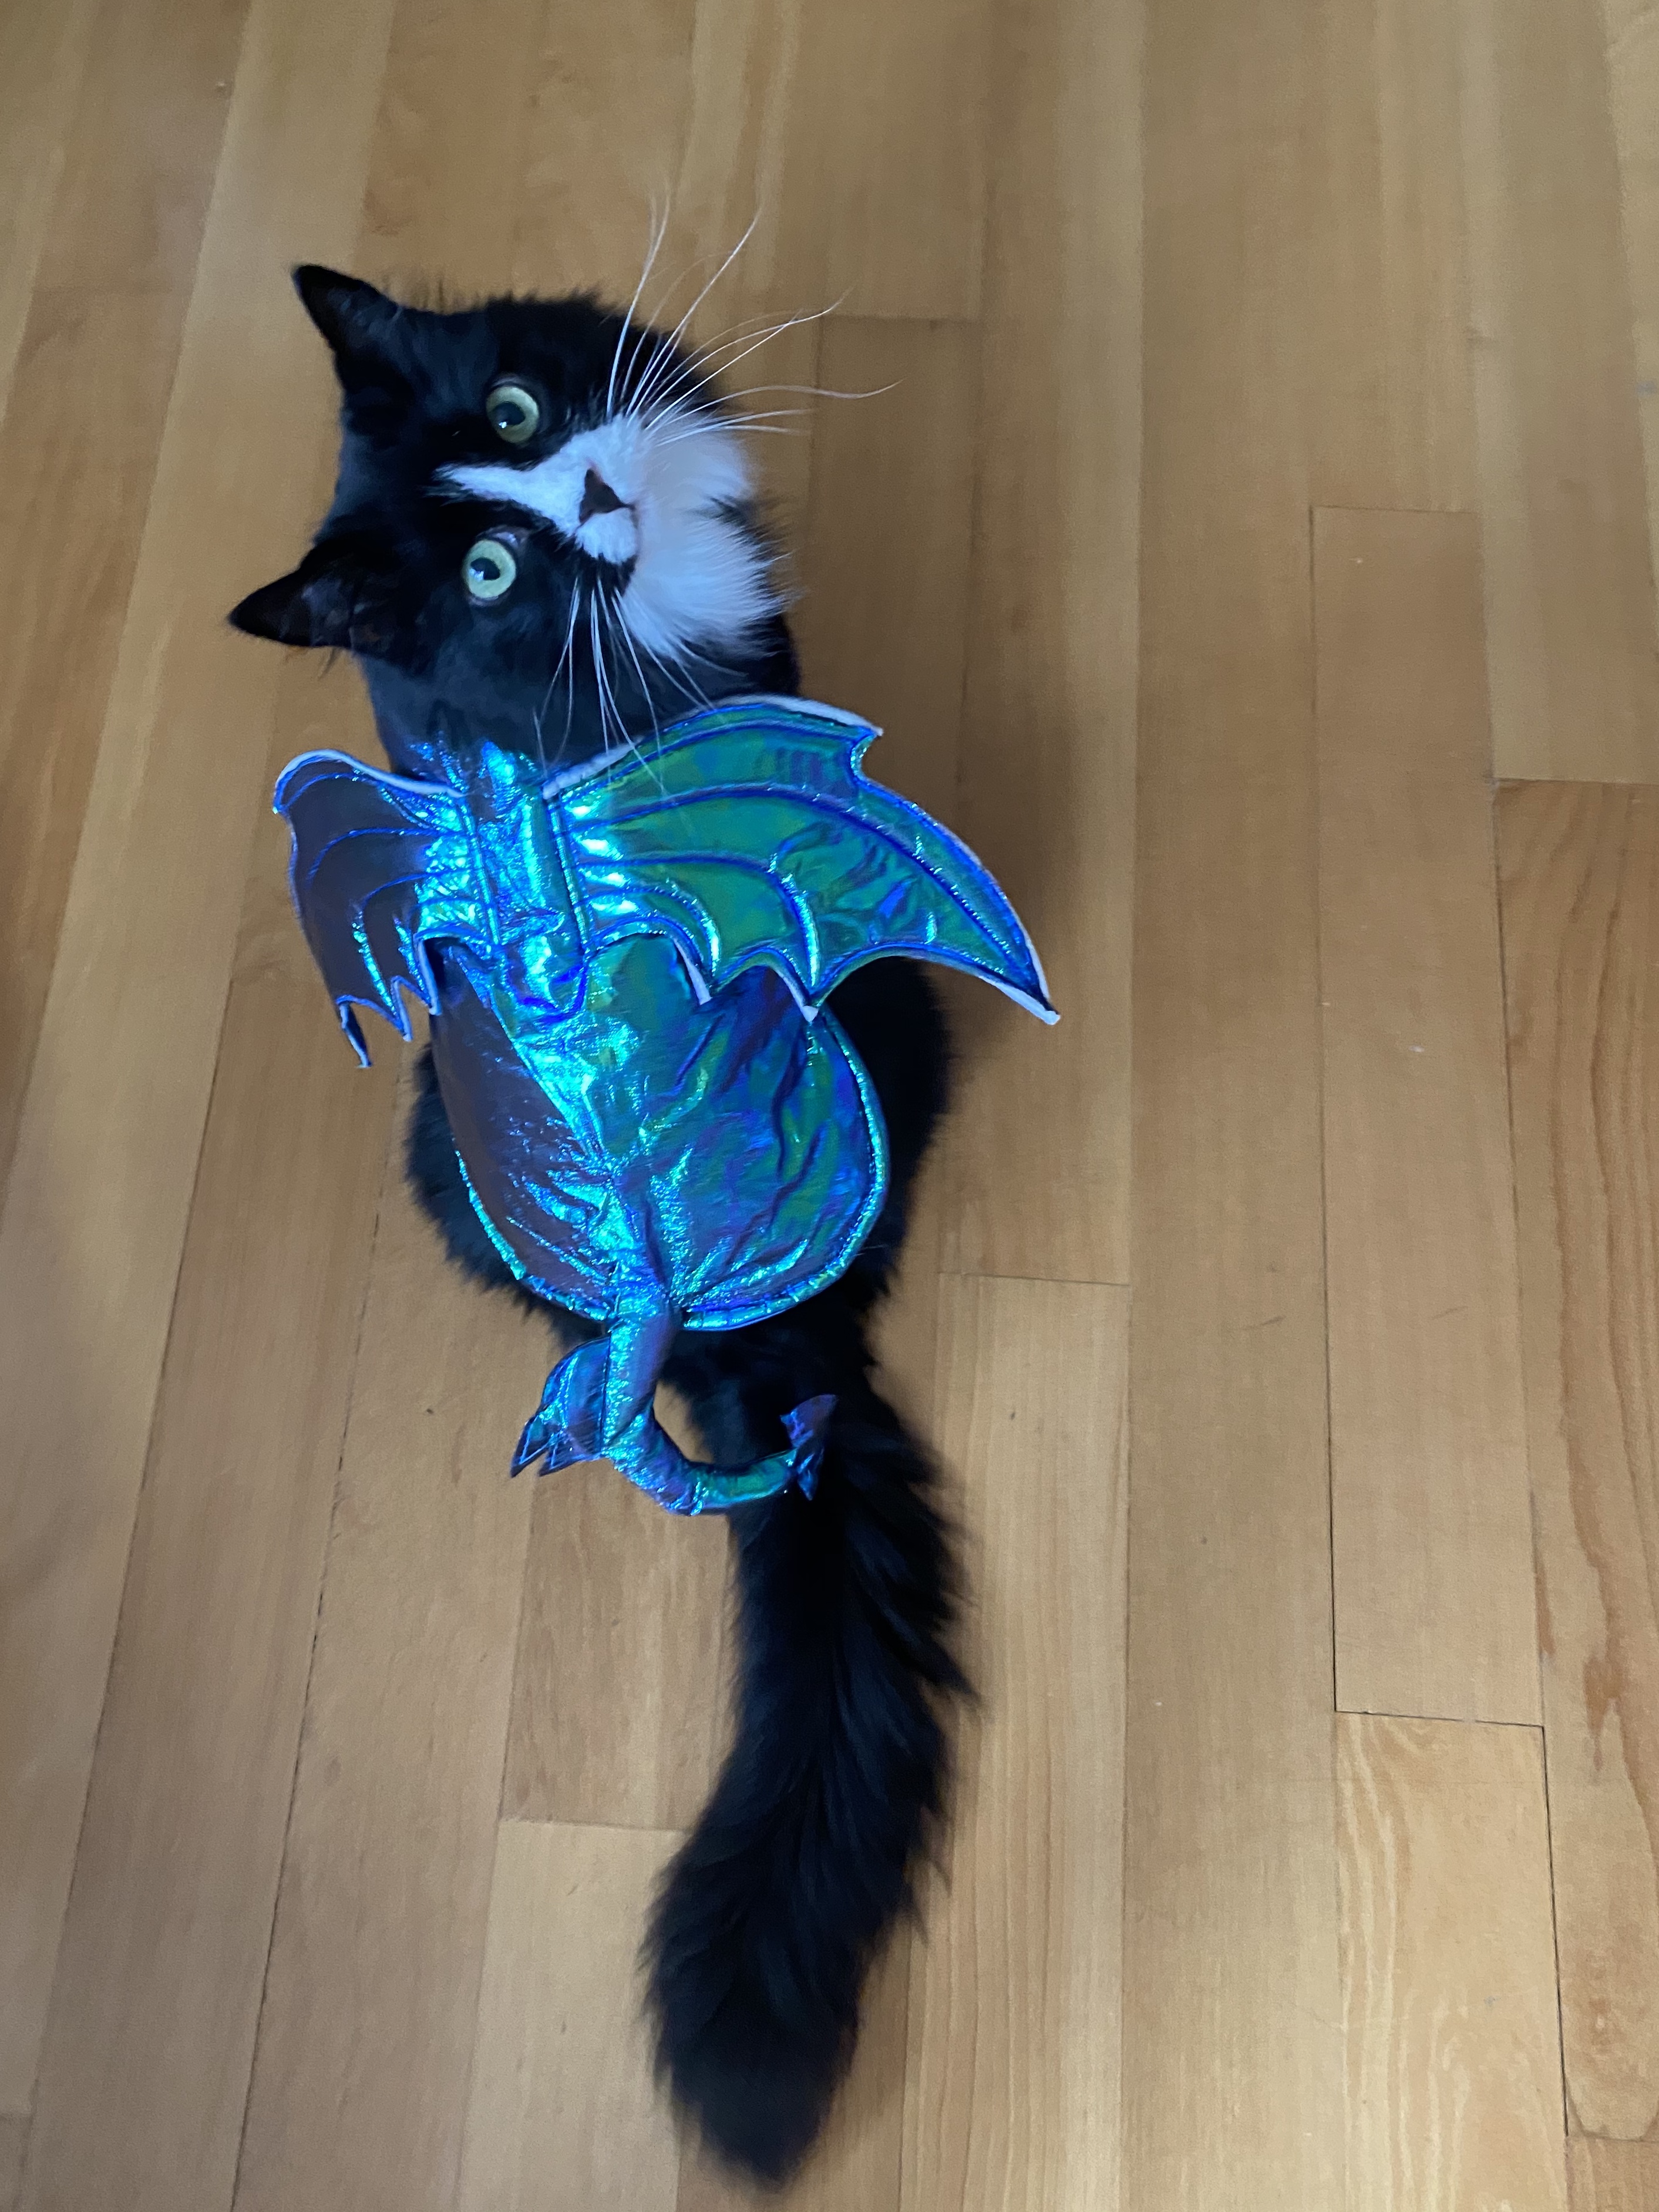 Emilie's cat, Jemima, dressed as a dragon